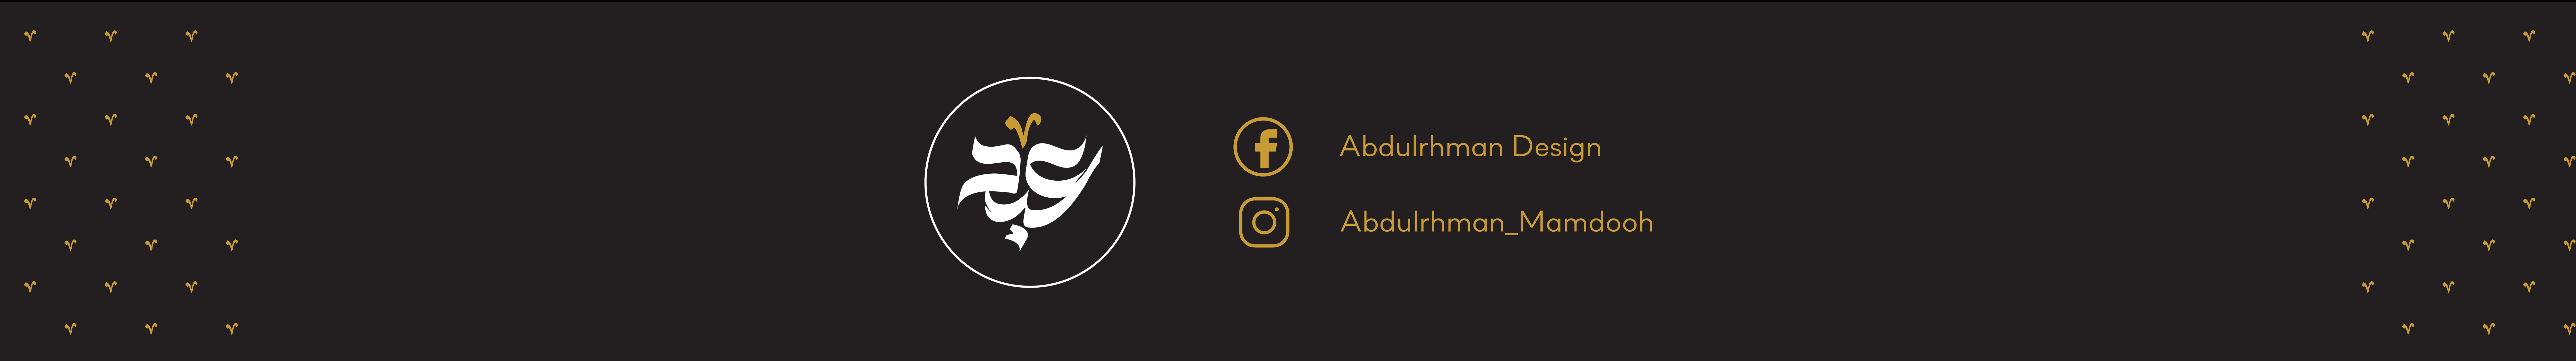 abdulrhman mamdooh's profile banner